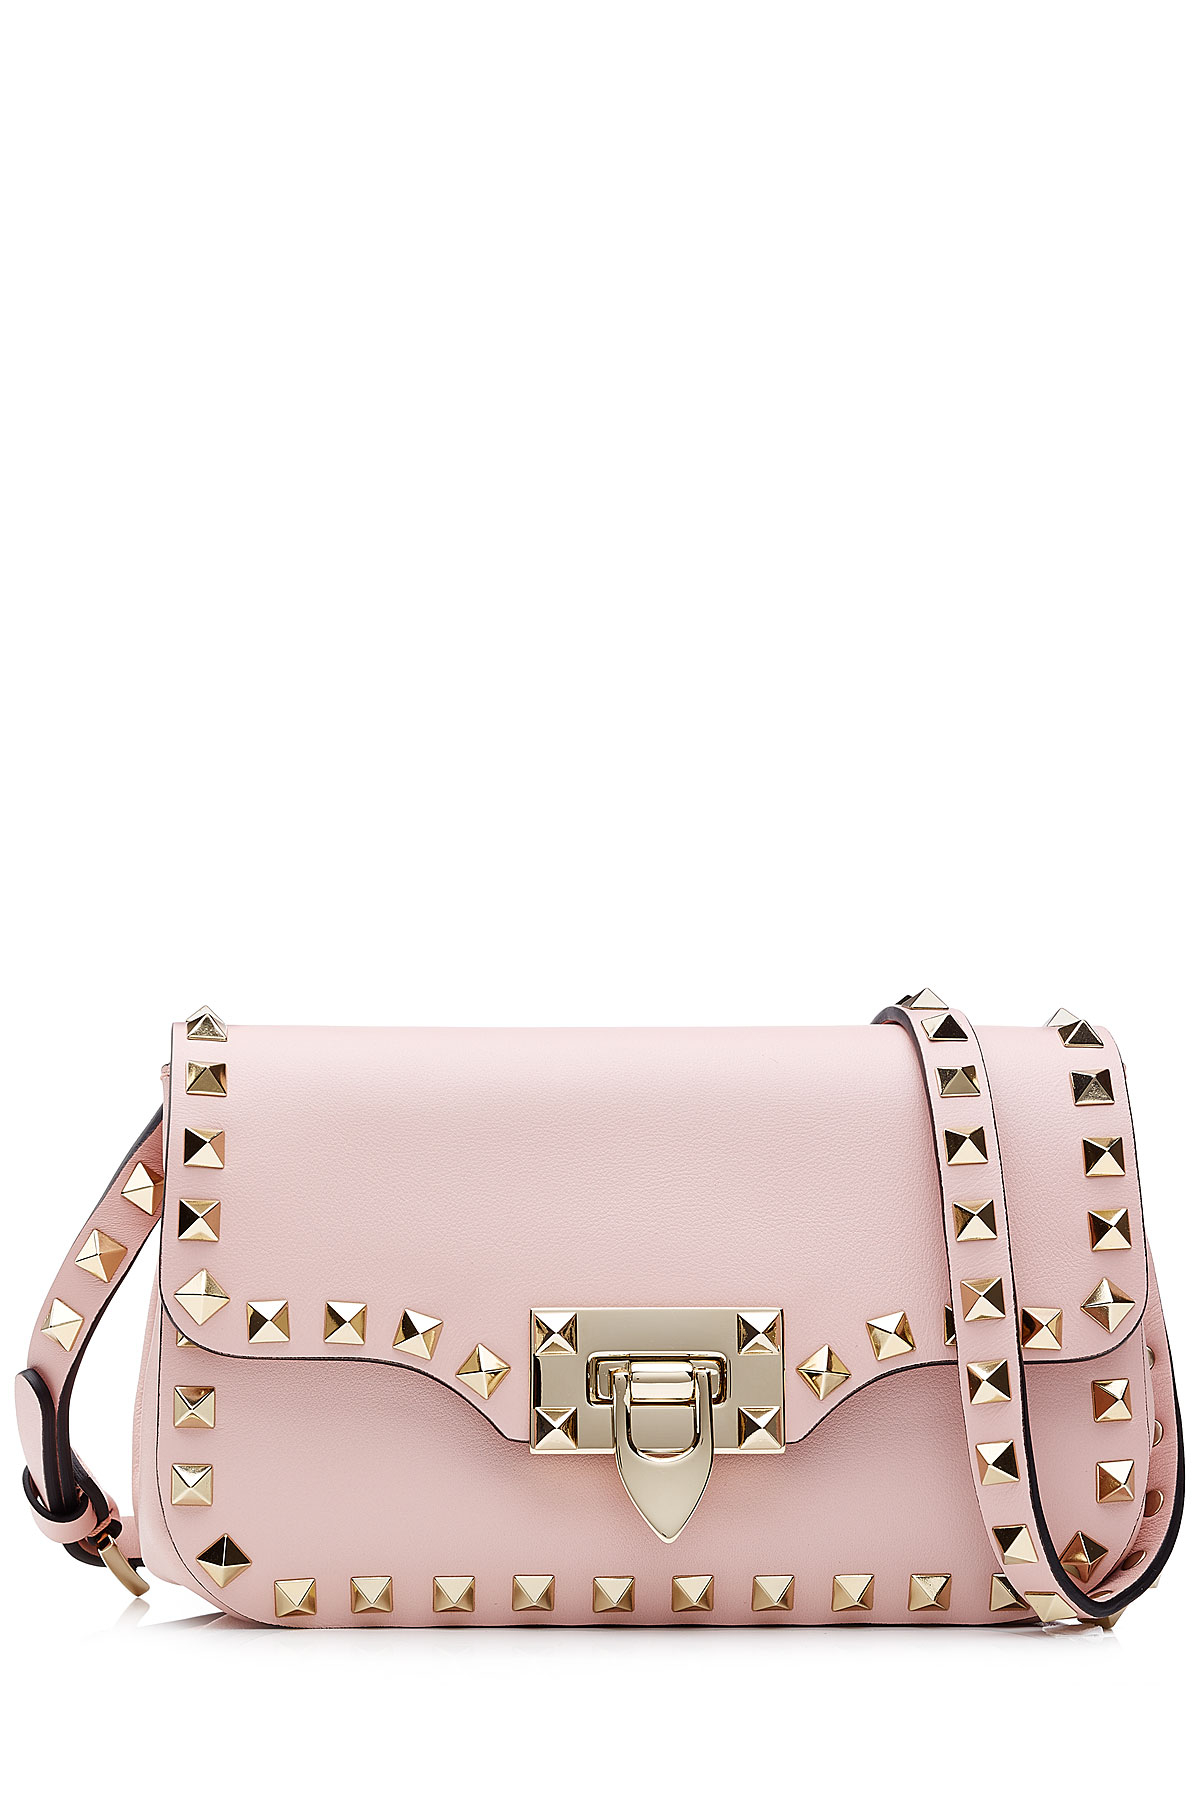 Lyst - Valentino Small Leather Rockstud Shoulder Bag - Rose in Pink